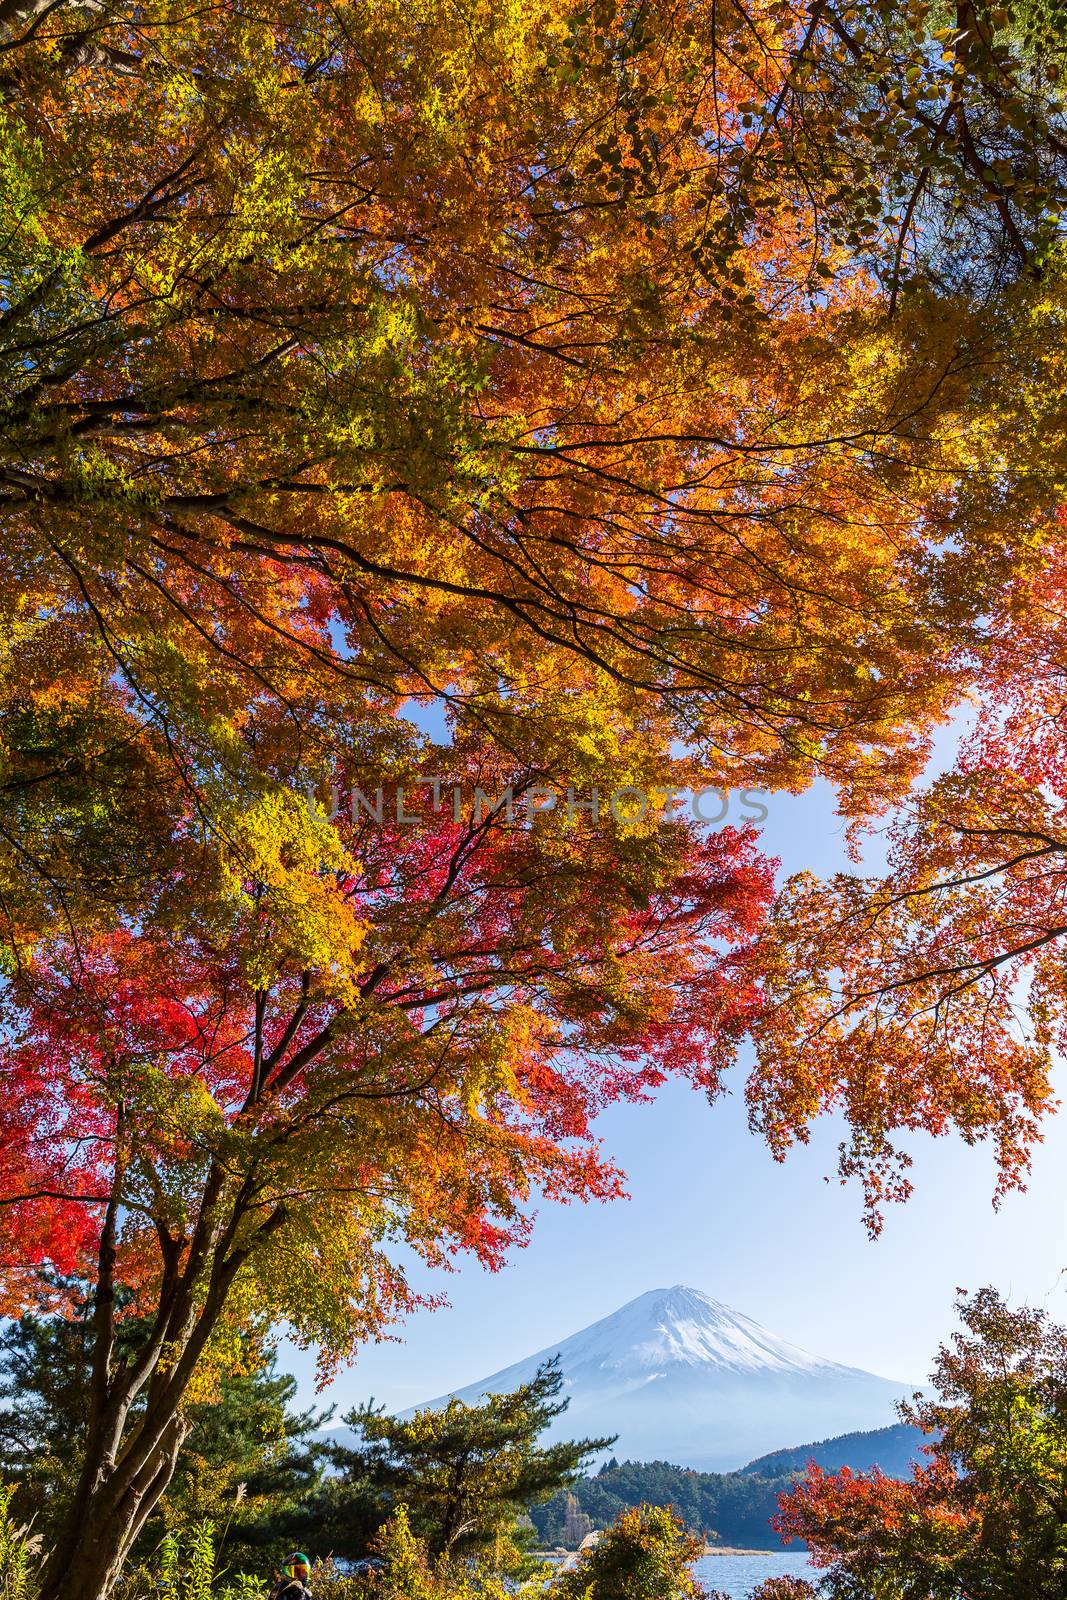 Mount Fuji in Autumn season of Japan by leungchopan